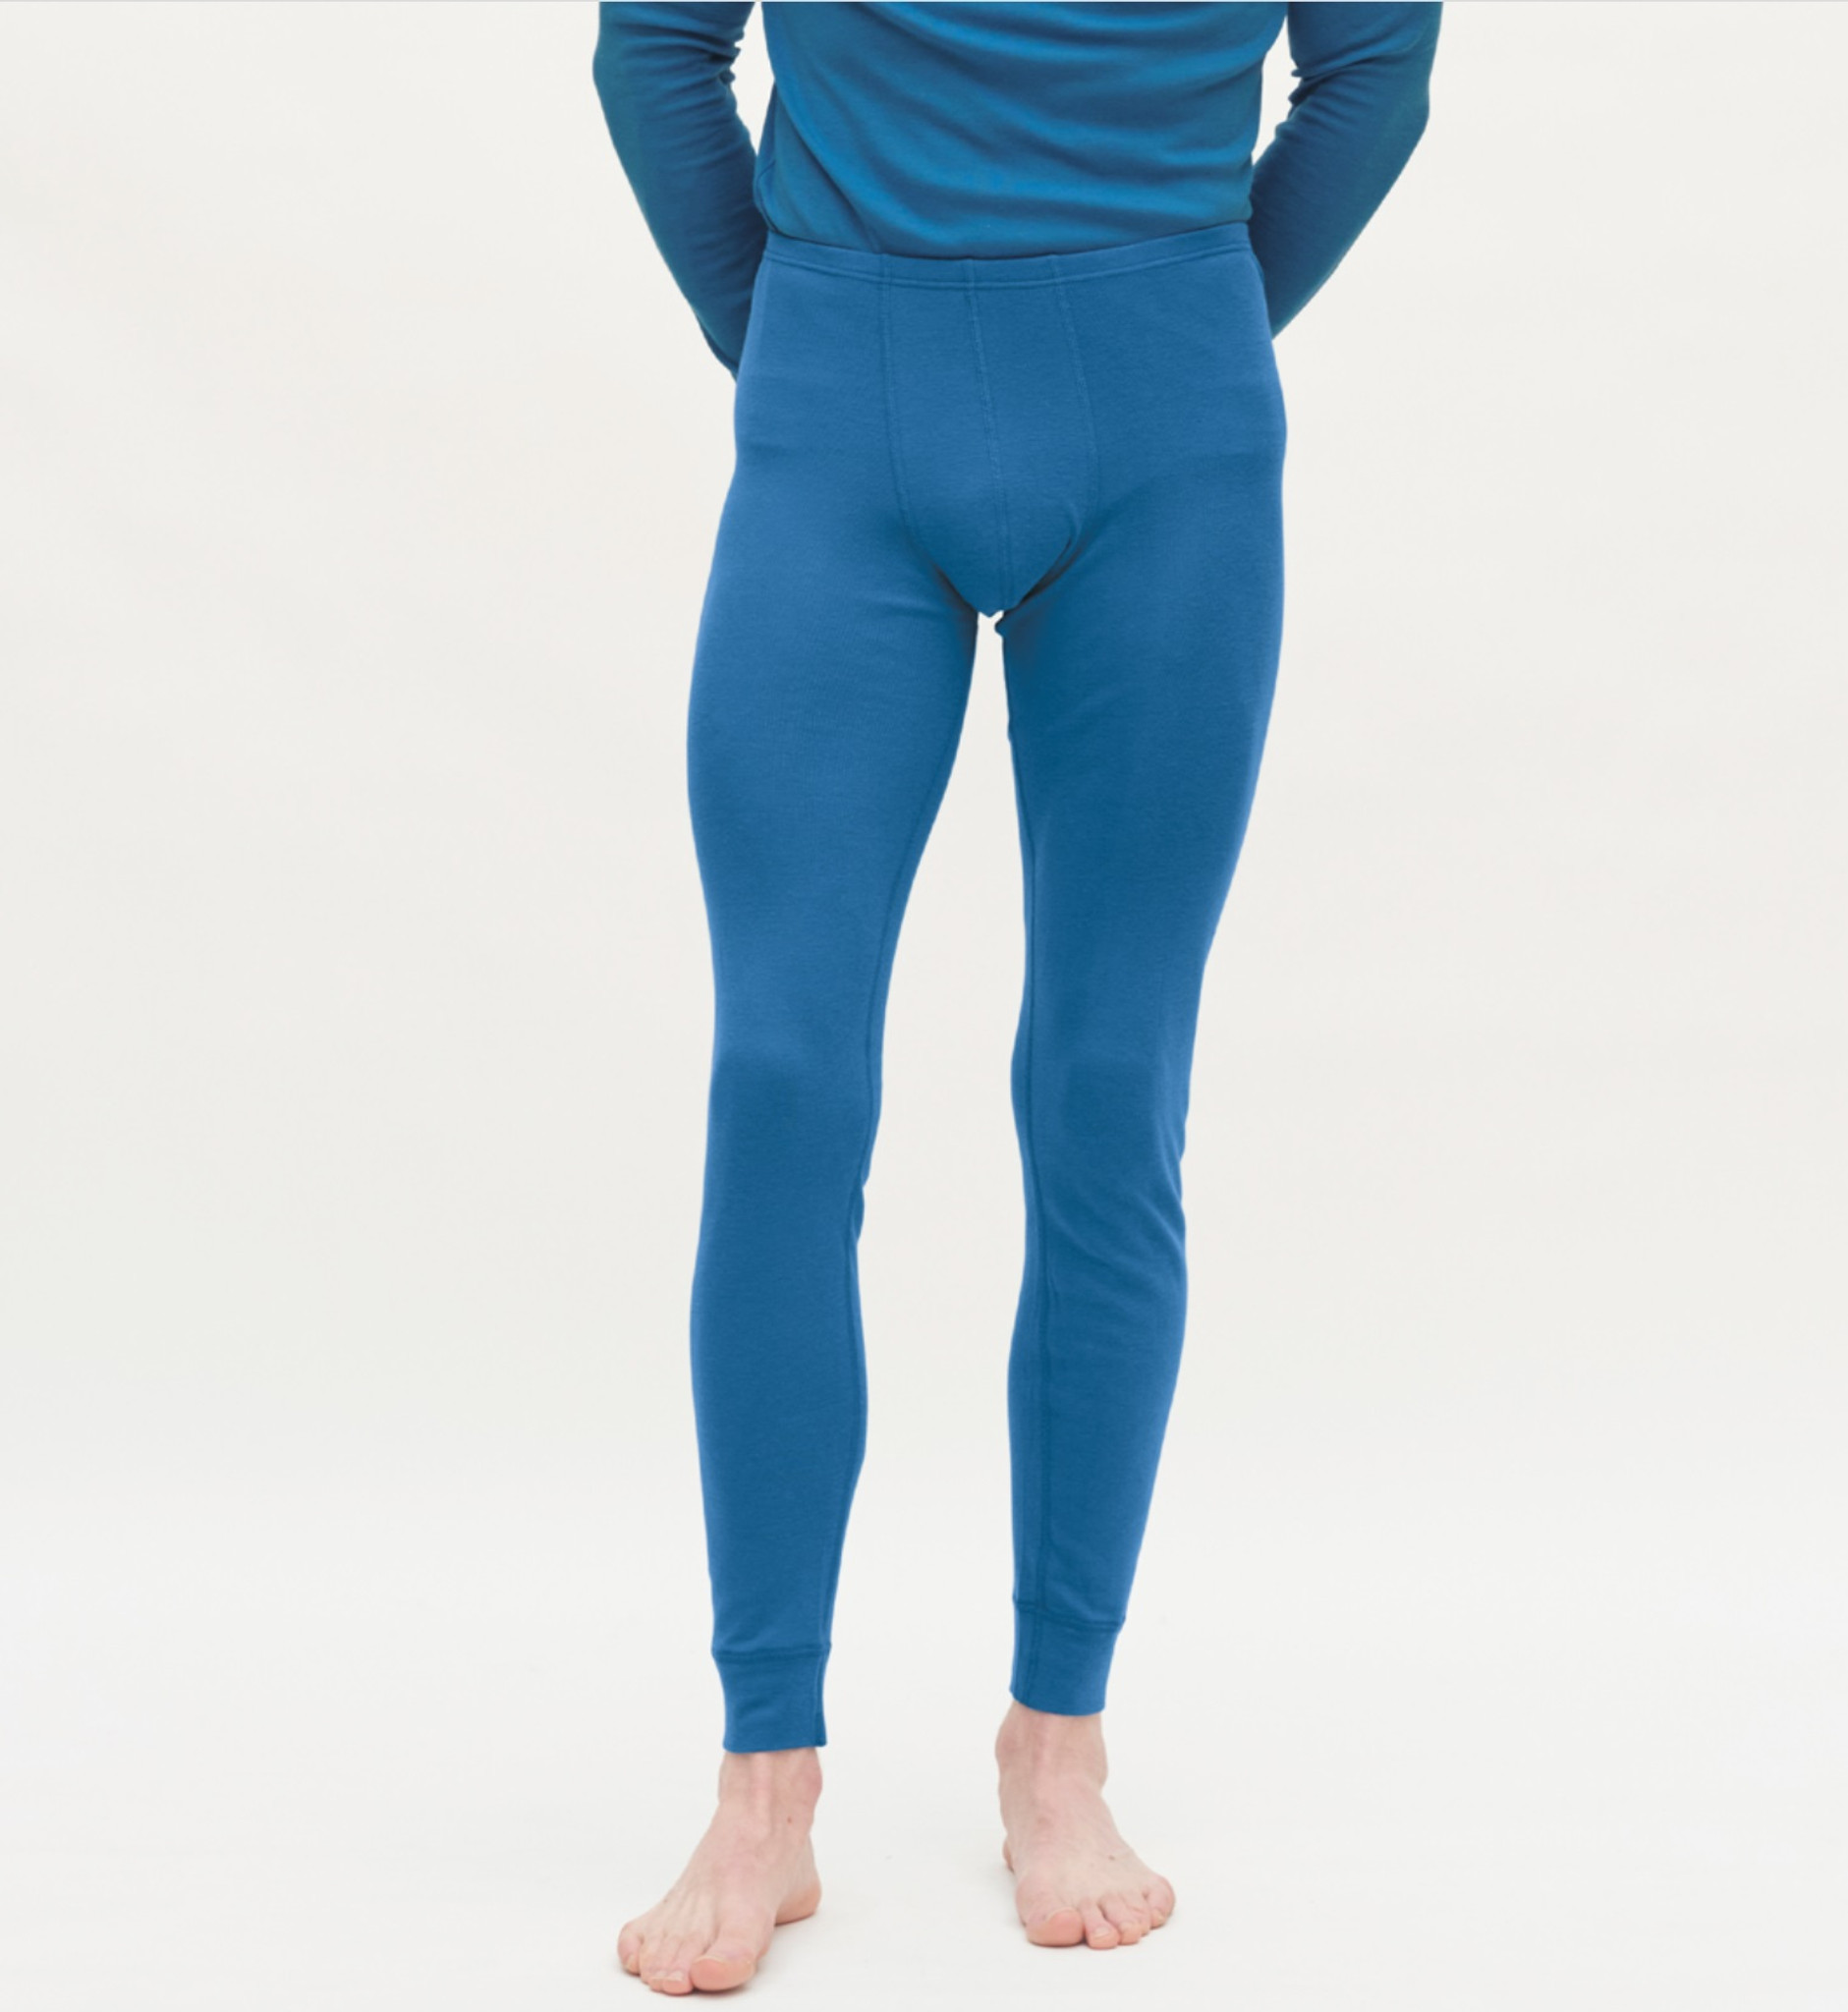 Natural Merino Wool Leggings for Men - Winter Long Johns - Thermal Underwear